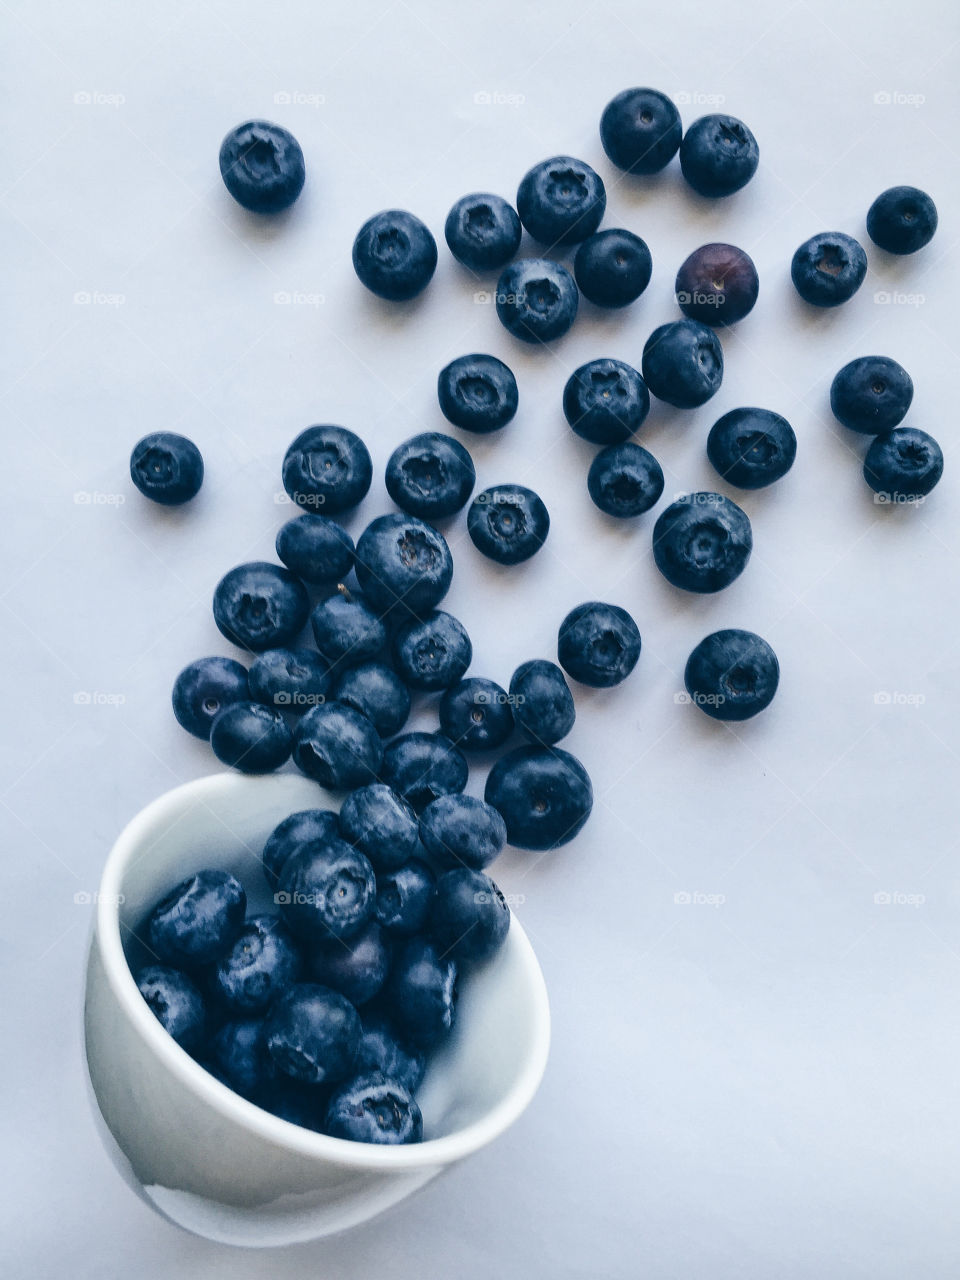 Blueberries against white background